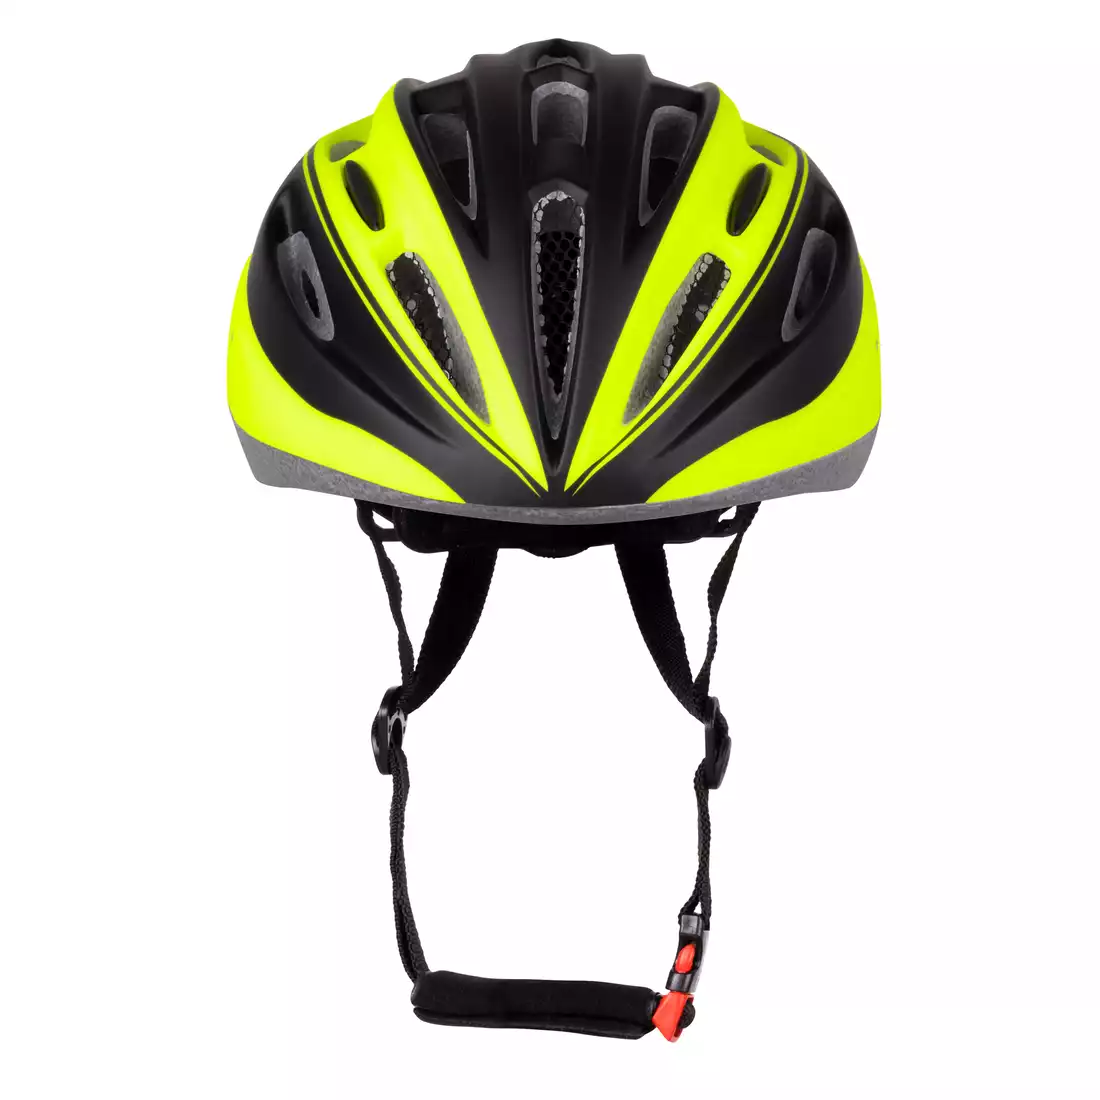 FORCE Road bike helmet TERY, black and fluo 902733